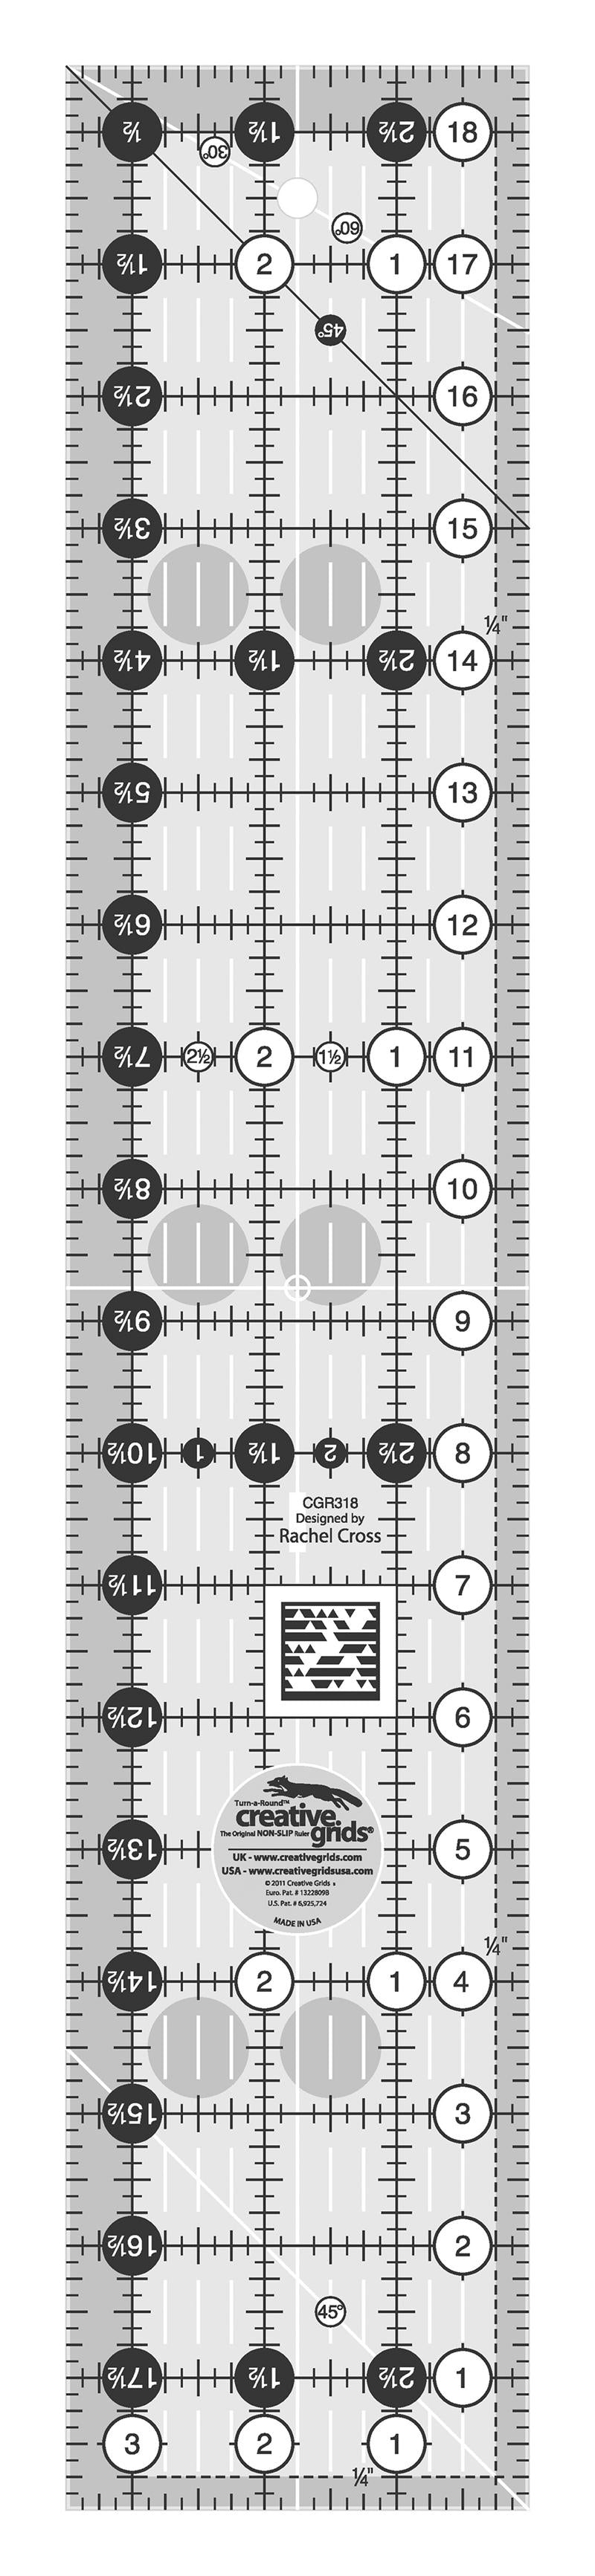 Creative Grids Regla rectangular de 3 1/2" x 18 1/2"